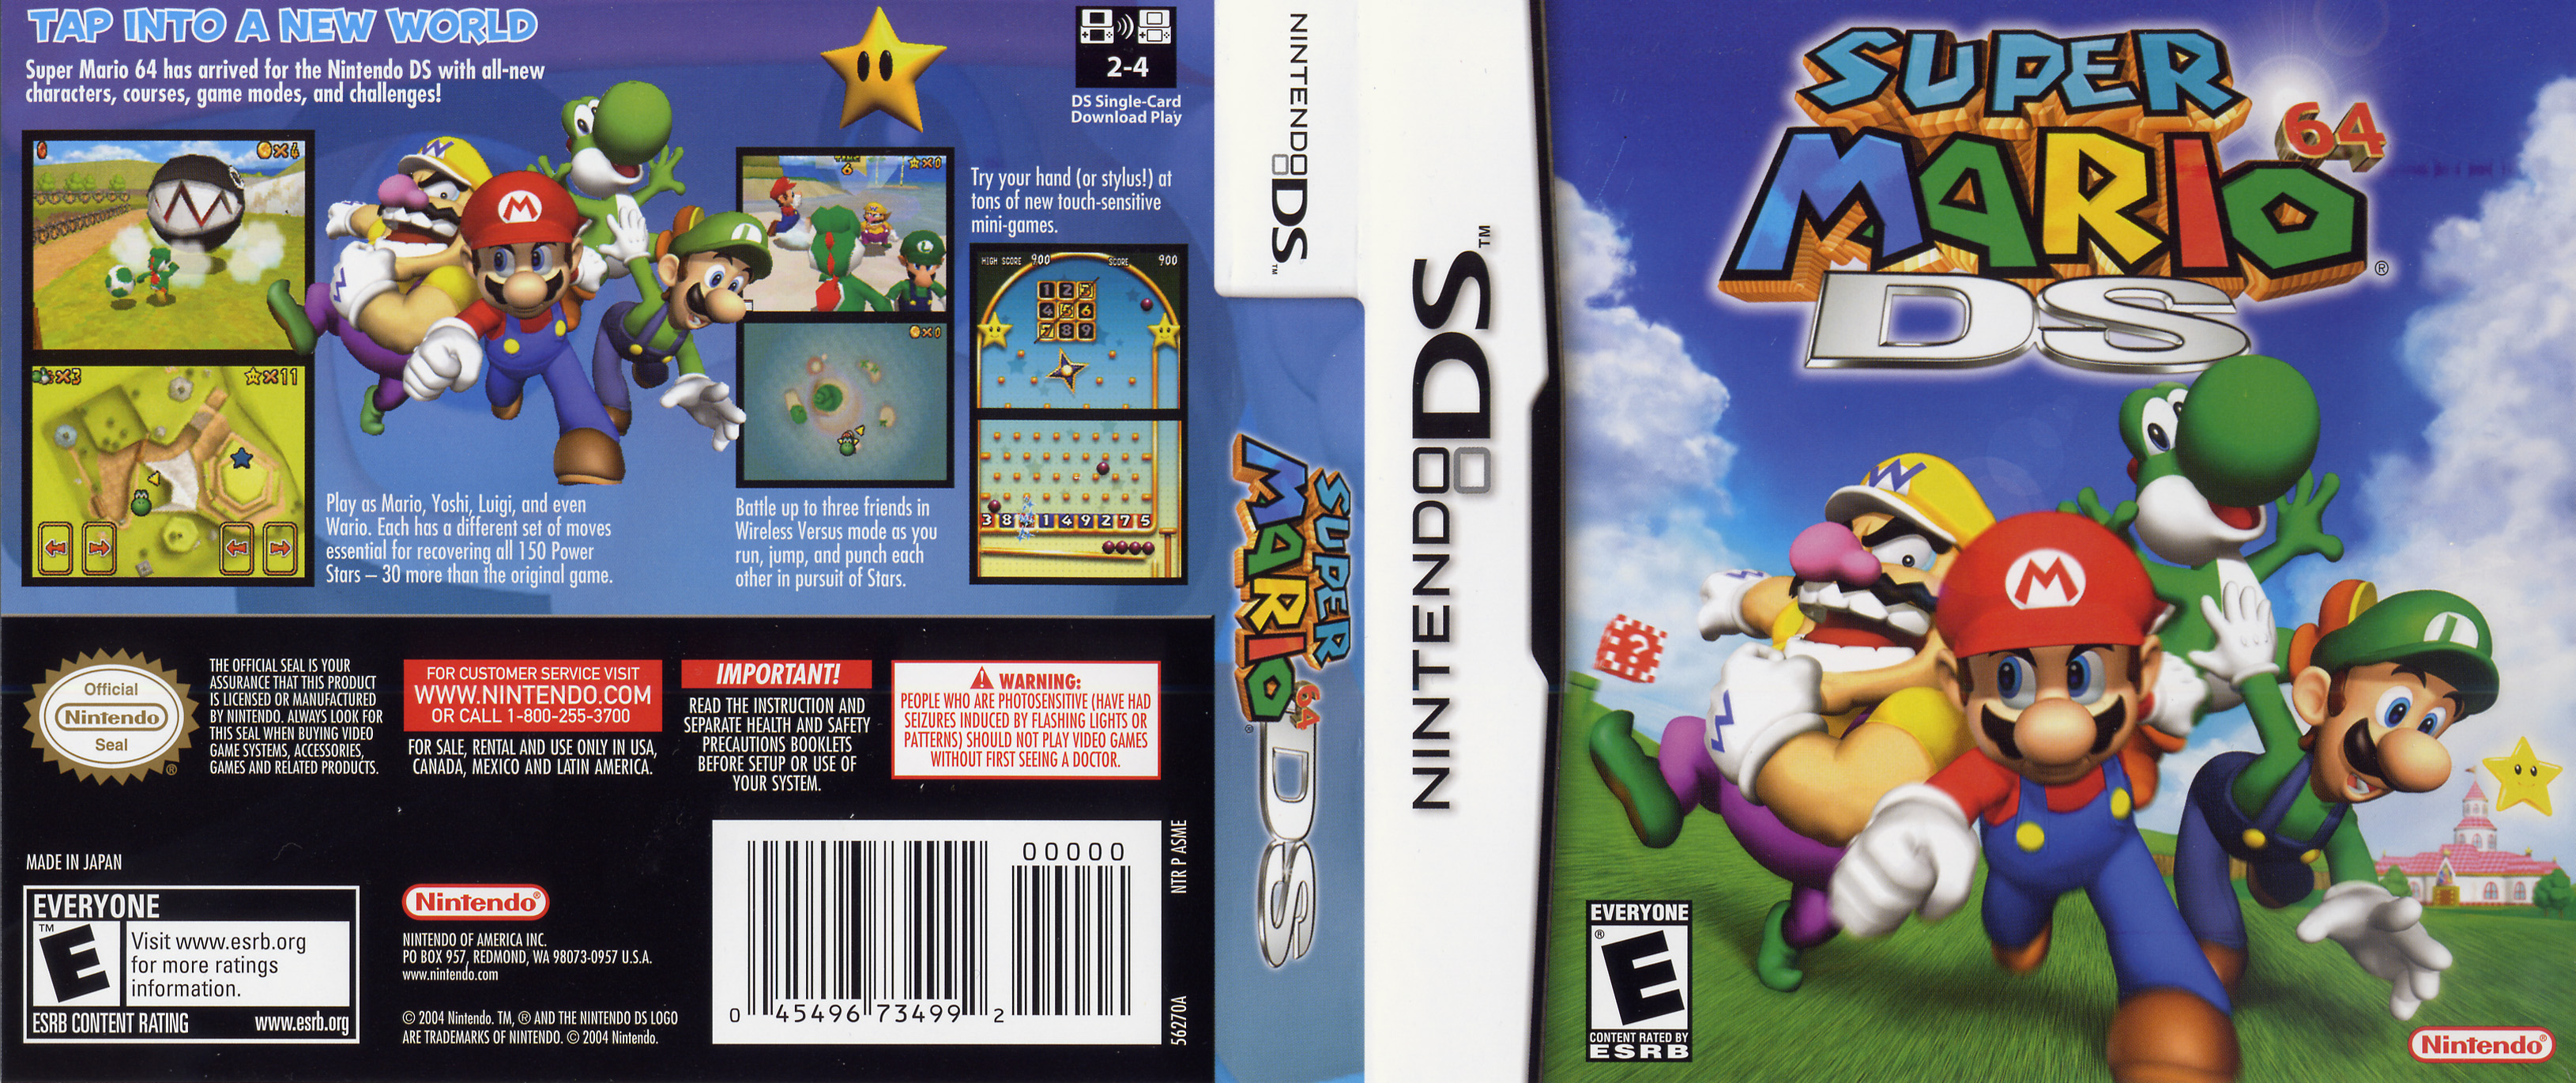 Nintendo 64 mario. Nintendo DS super Mario 64 DS. Супер Марио 64 Нинтендо ДС. Nintendo 64 Mario 64 диск. New super Mario Bros. Нинтендо ДС.